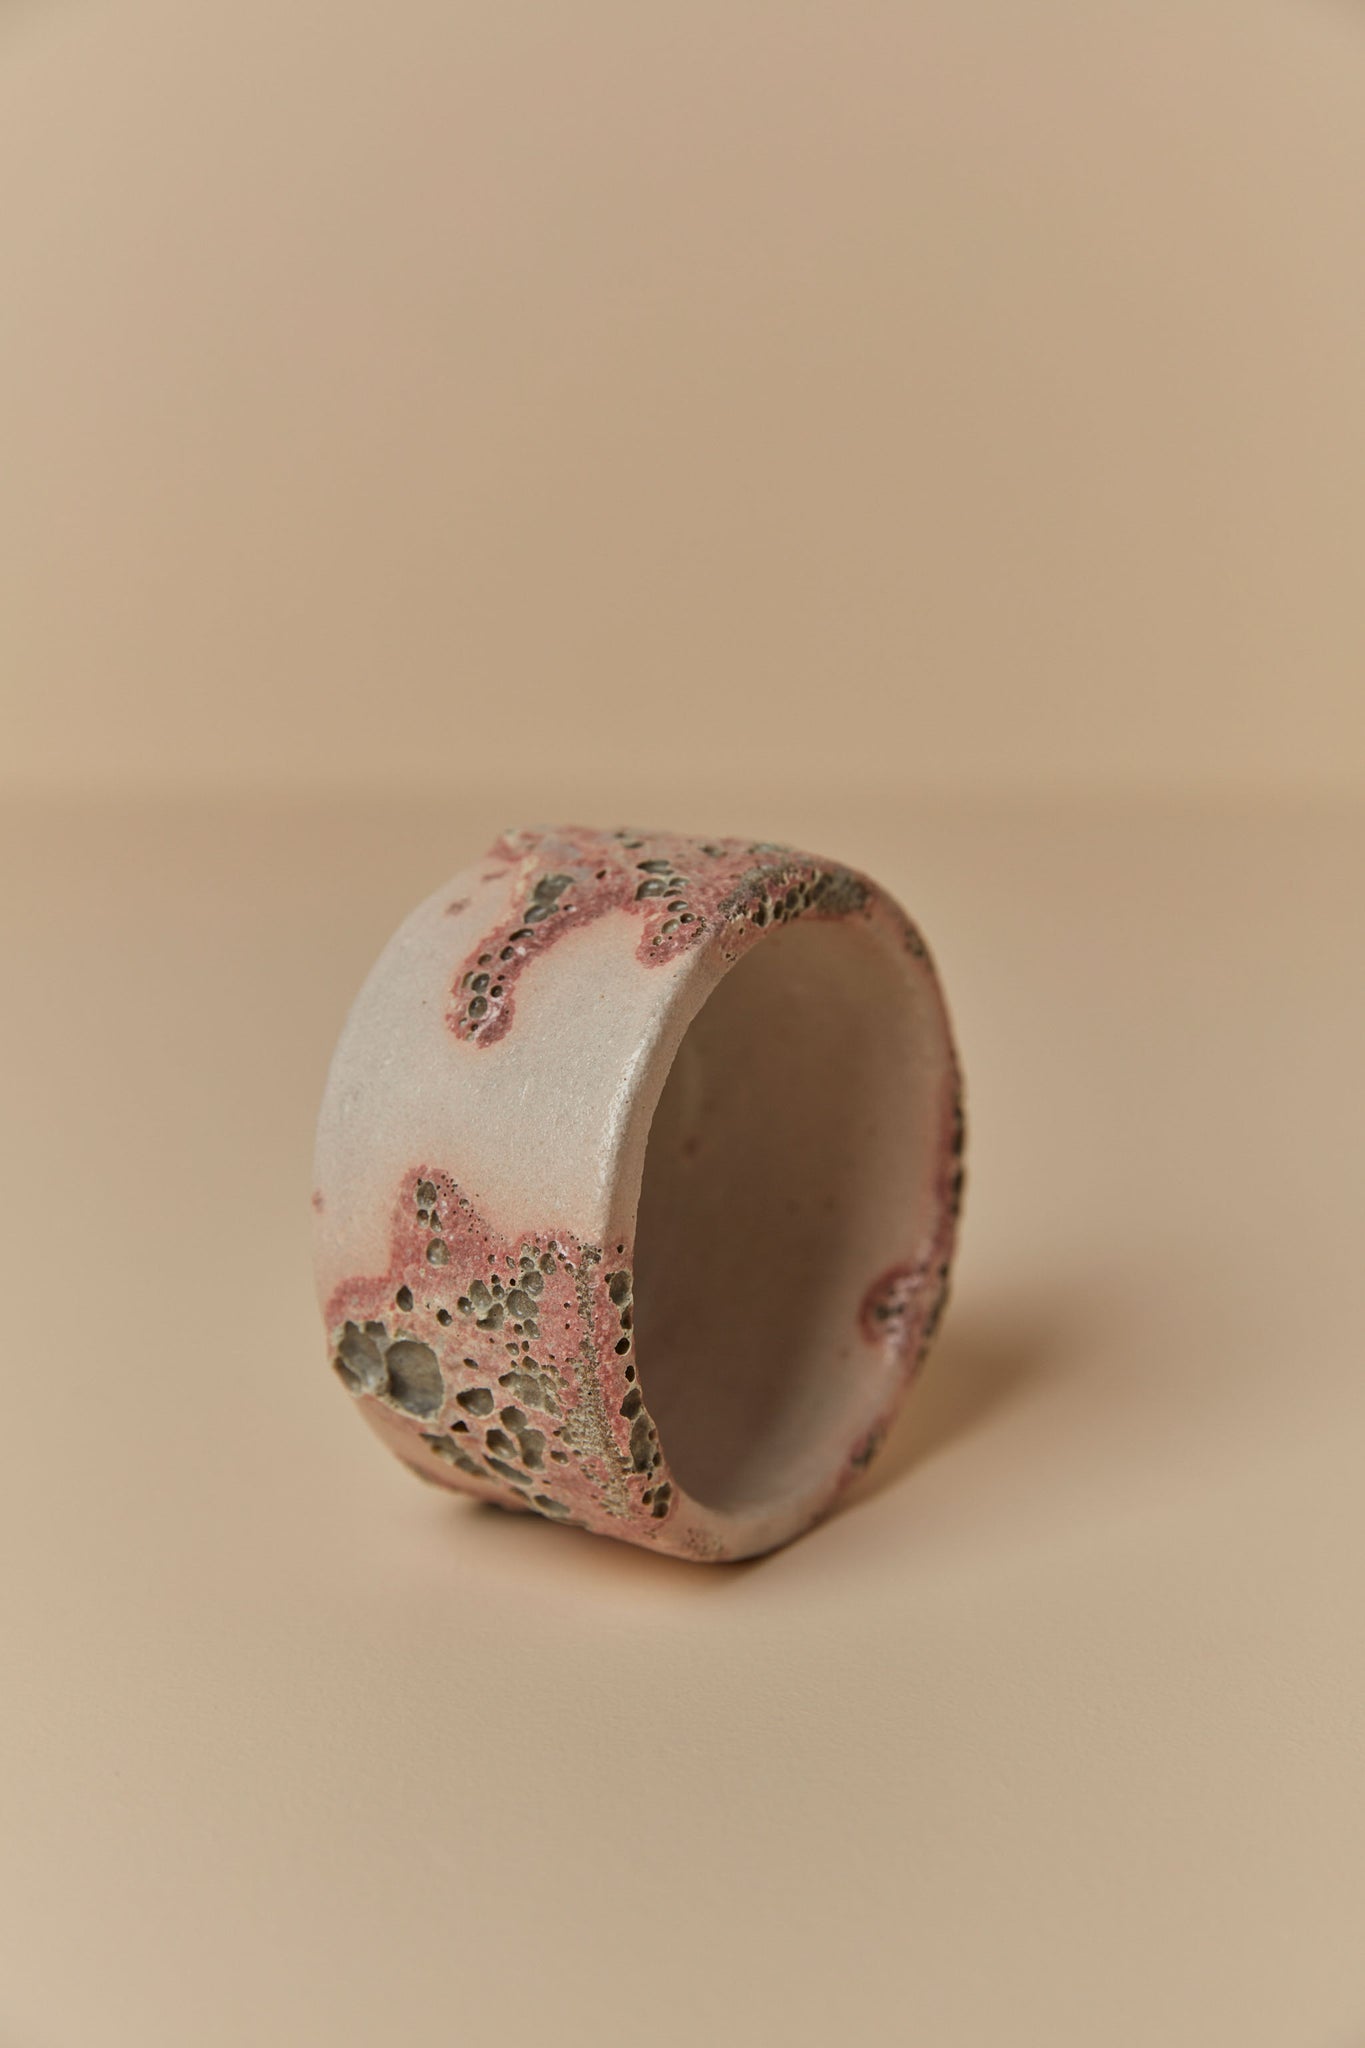 Tanika Jellis - Trinket Bowl, Textured Quartz